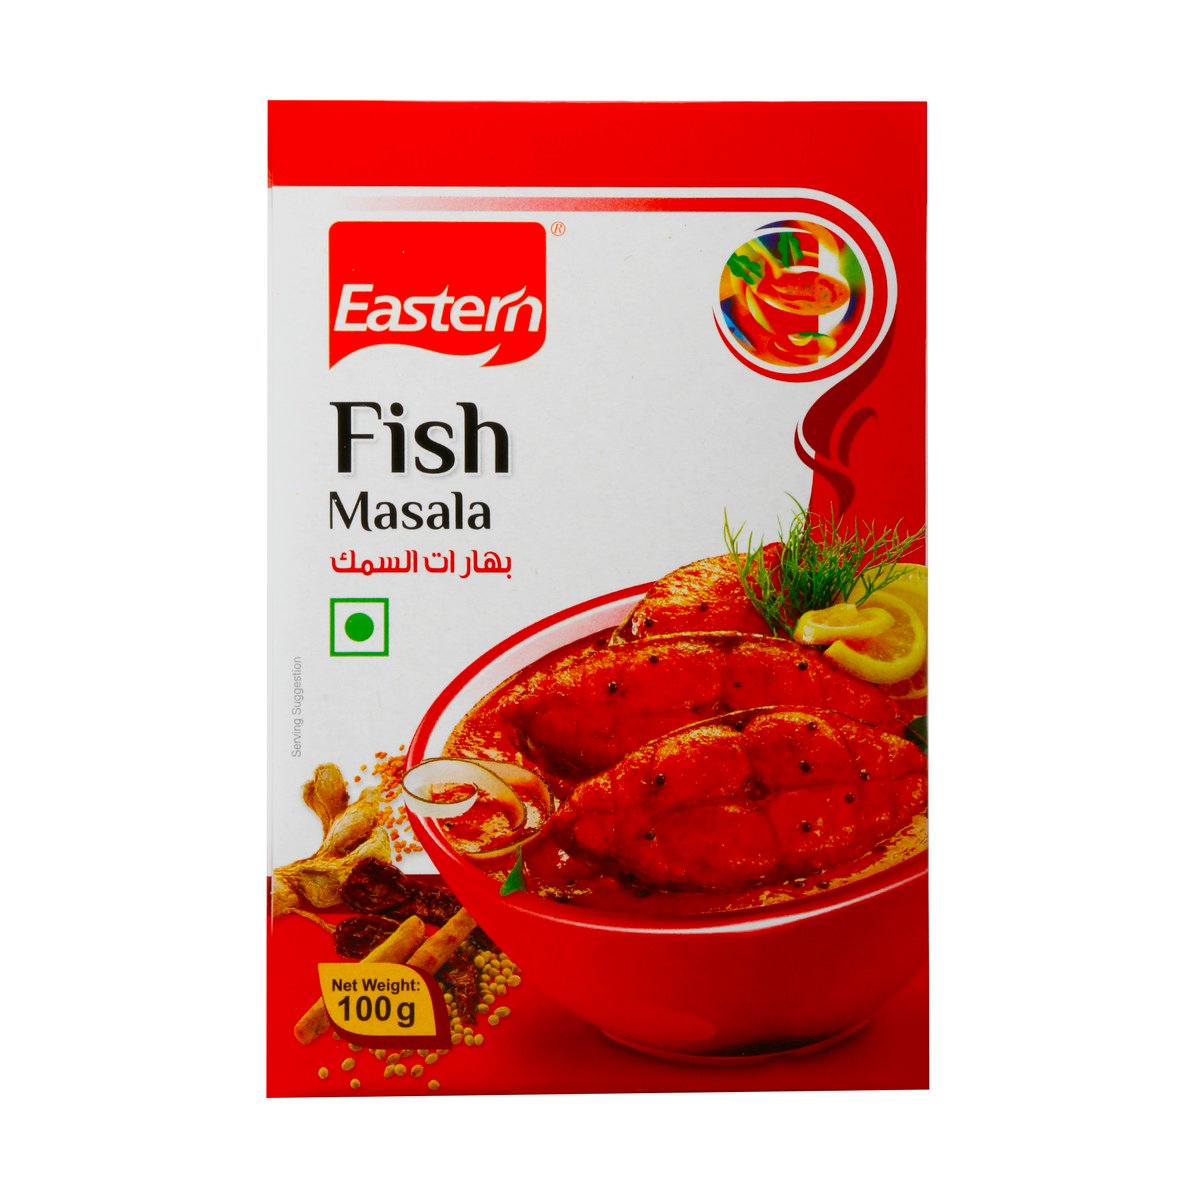 Eastern Fish Masala 100g